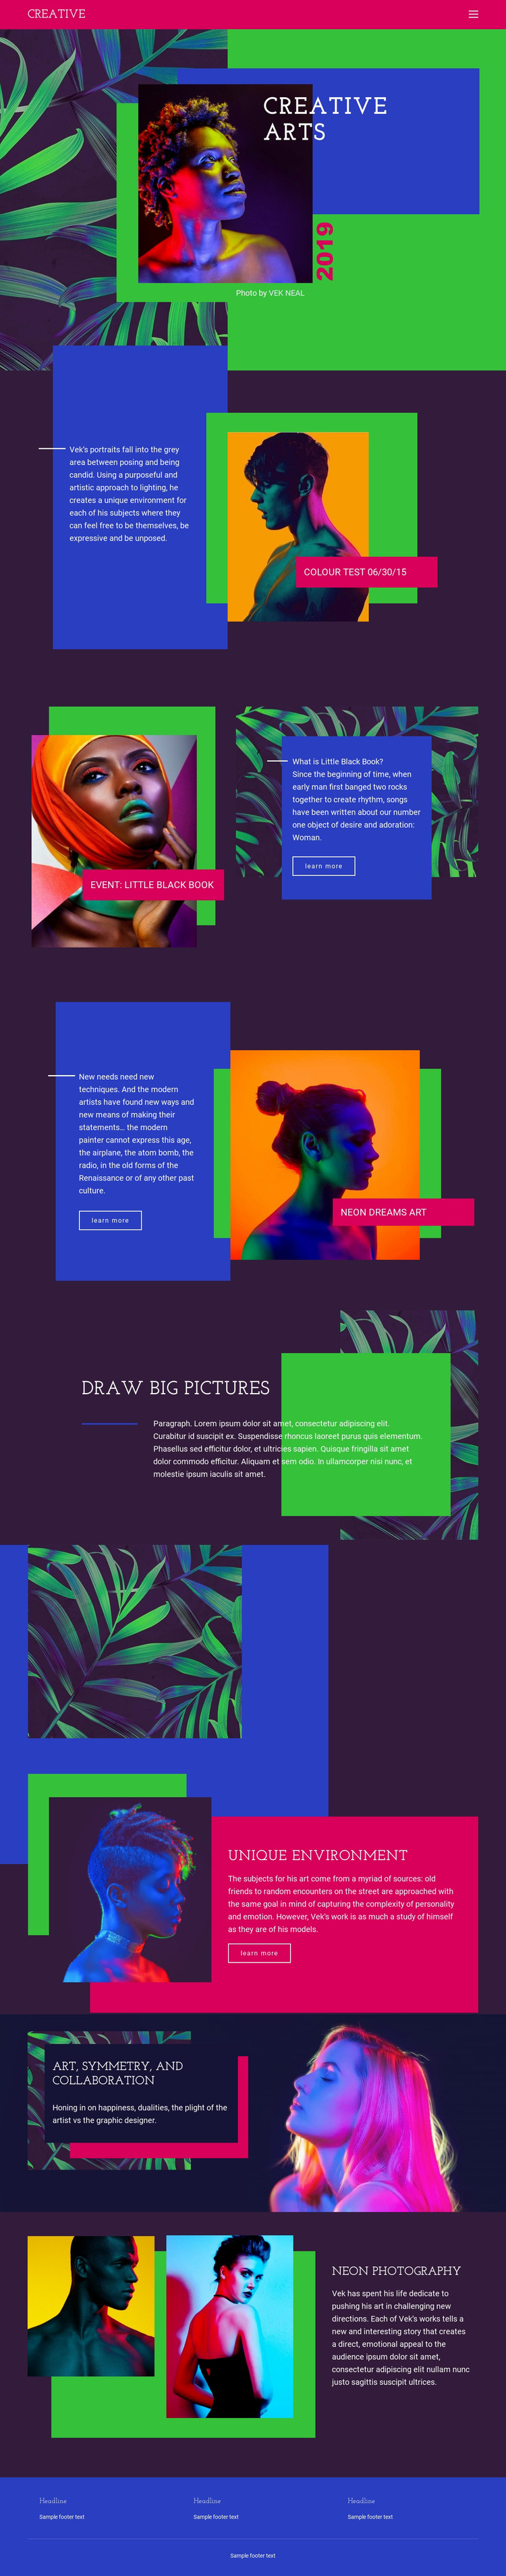 Creative Art Ideas Website Builder Templates